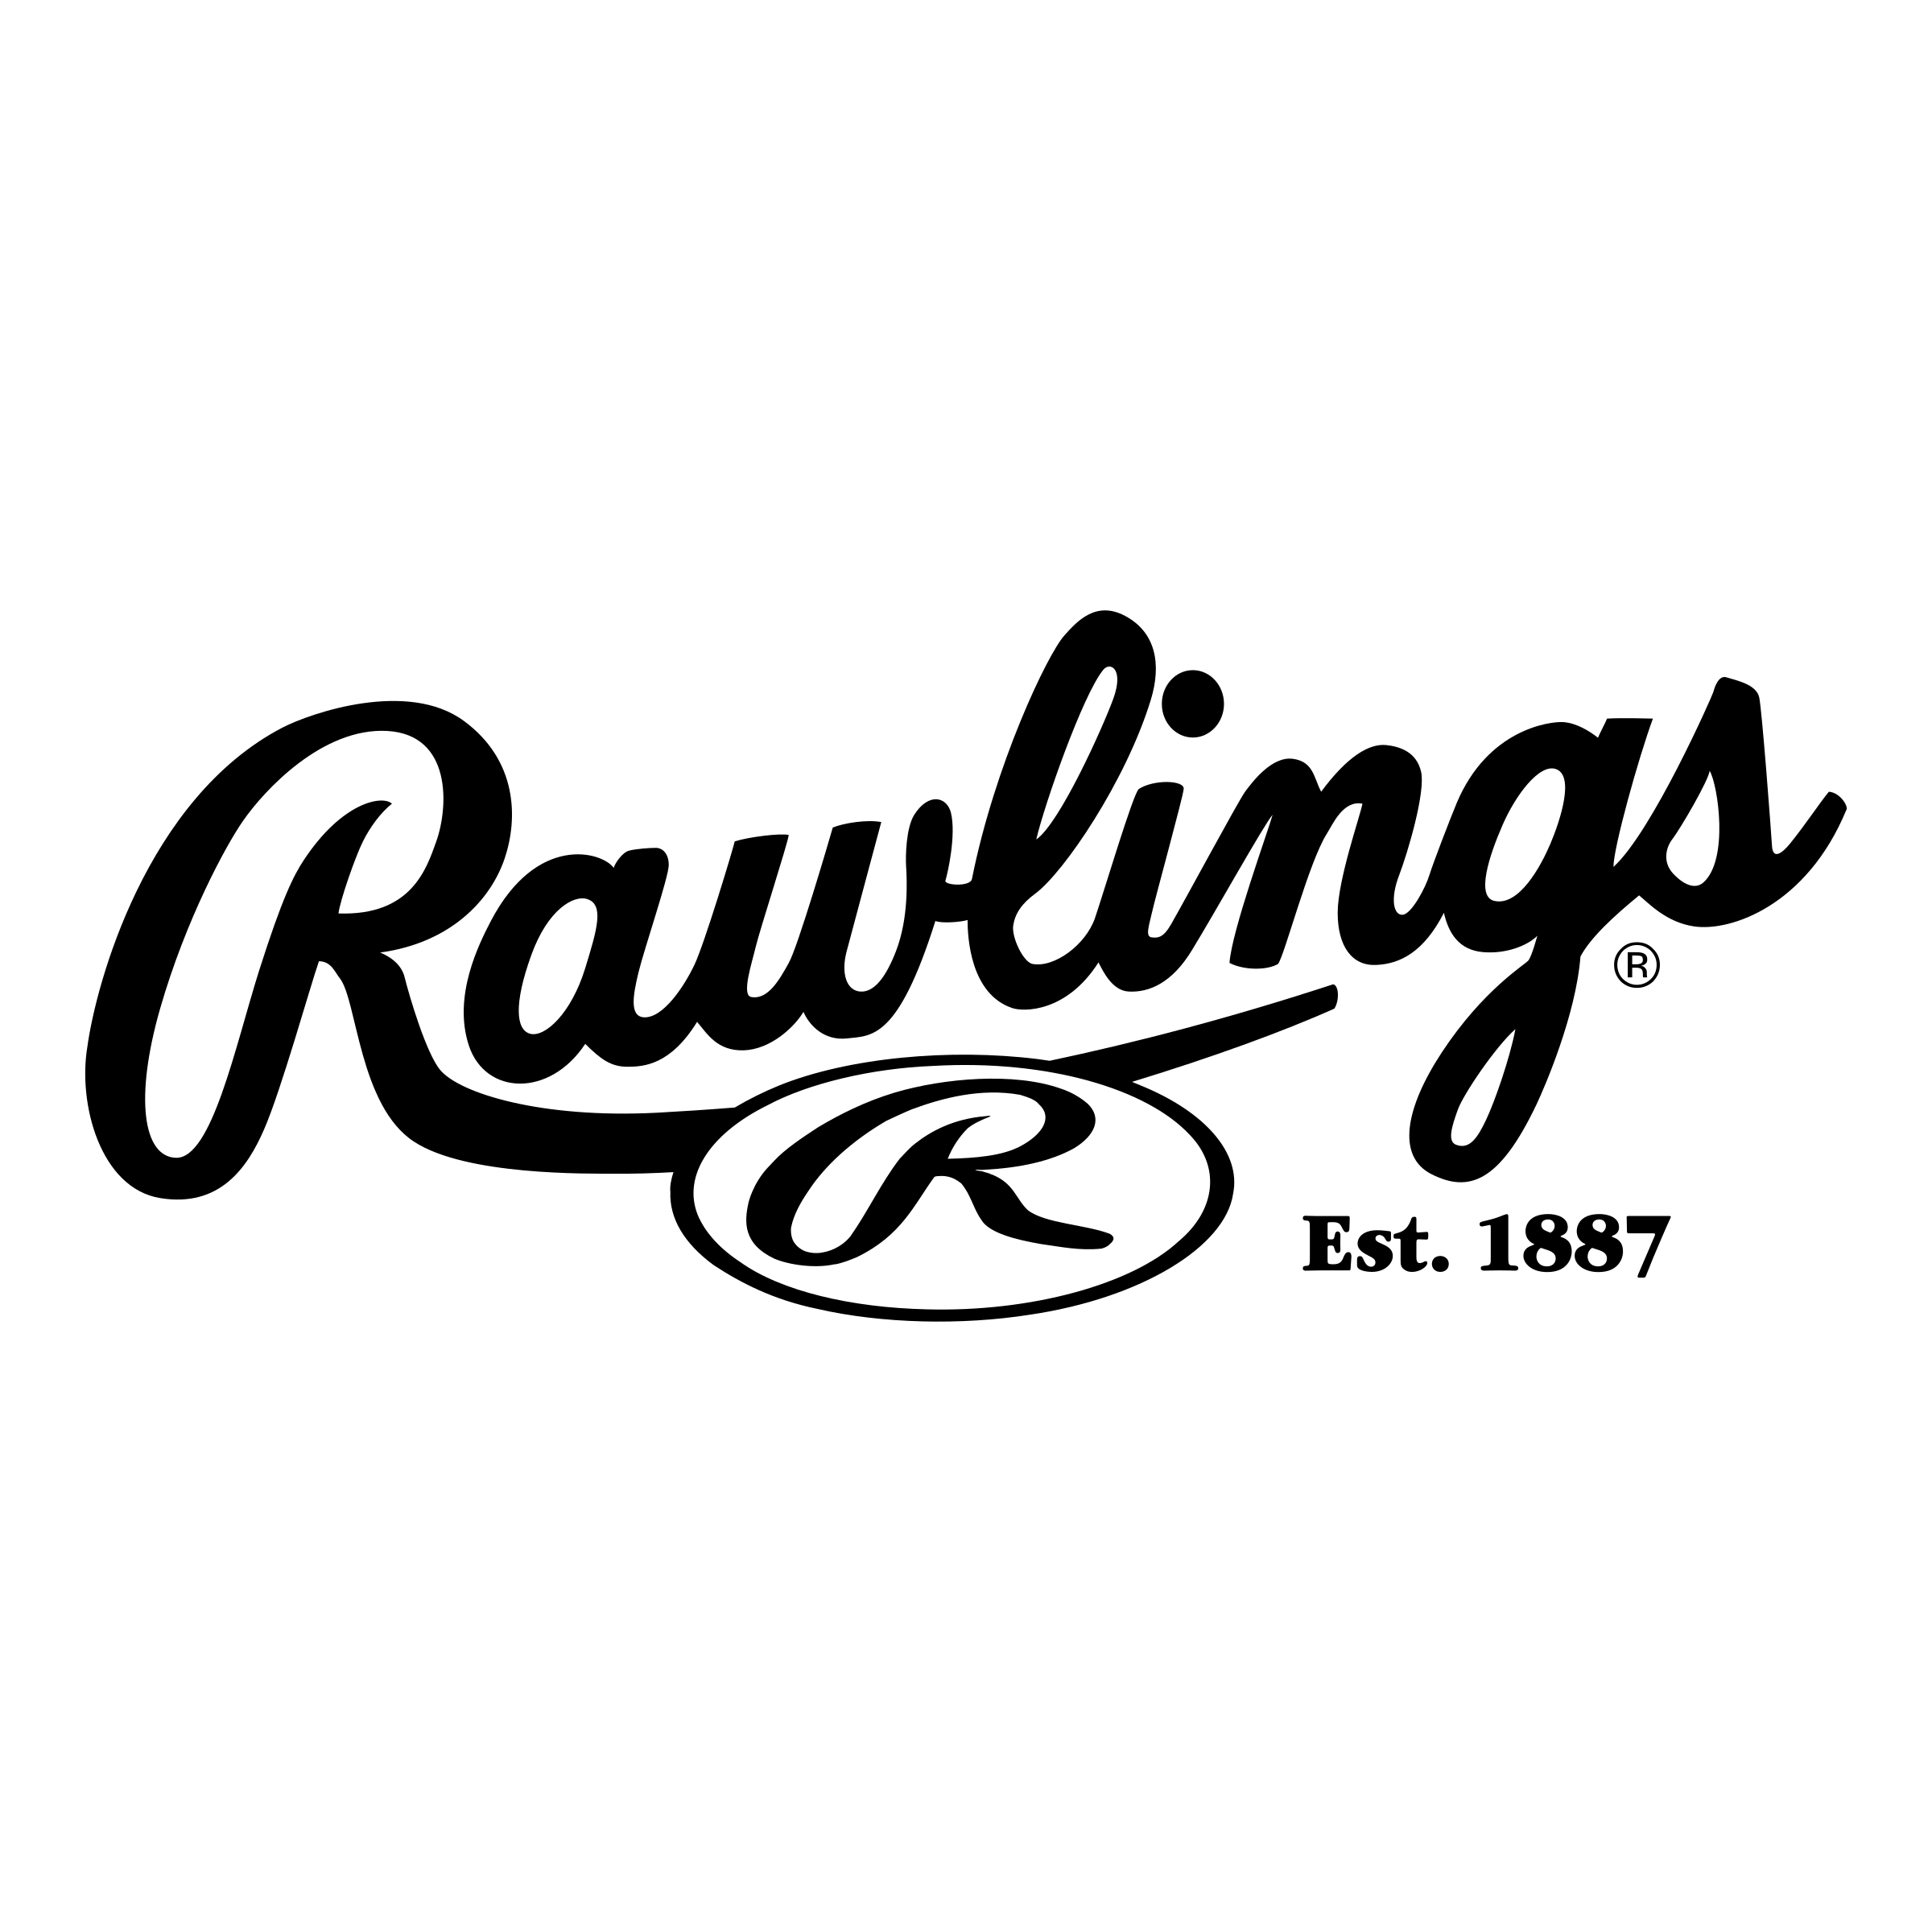 Rawlings Logo - Rawlings Logo PNG Transparent & SVG Vector - Freebie Supply